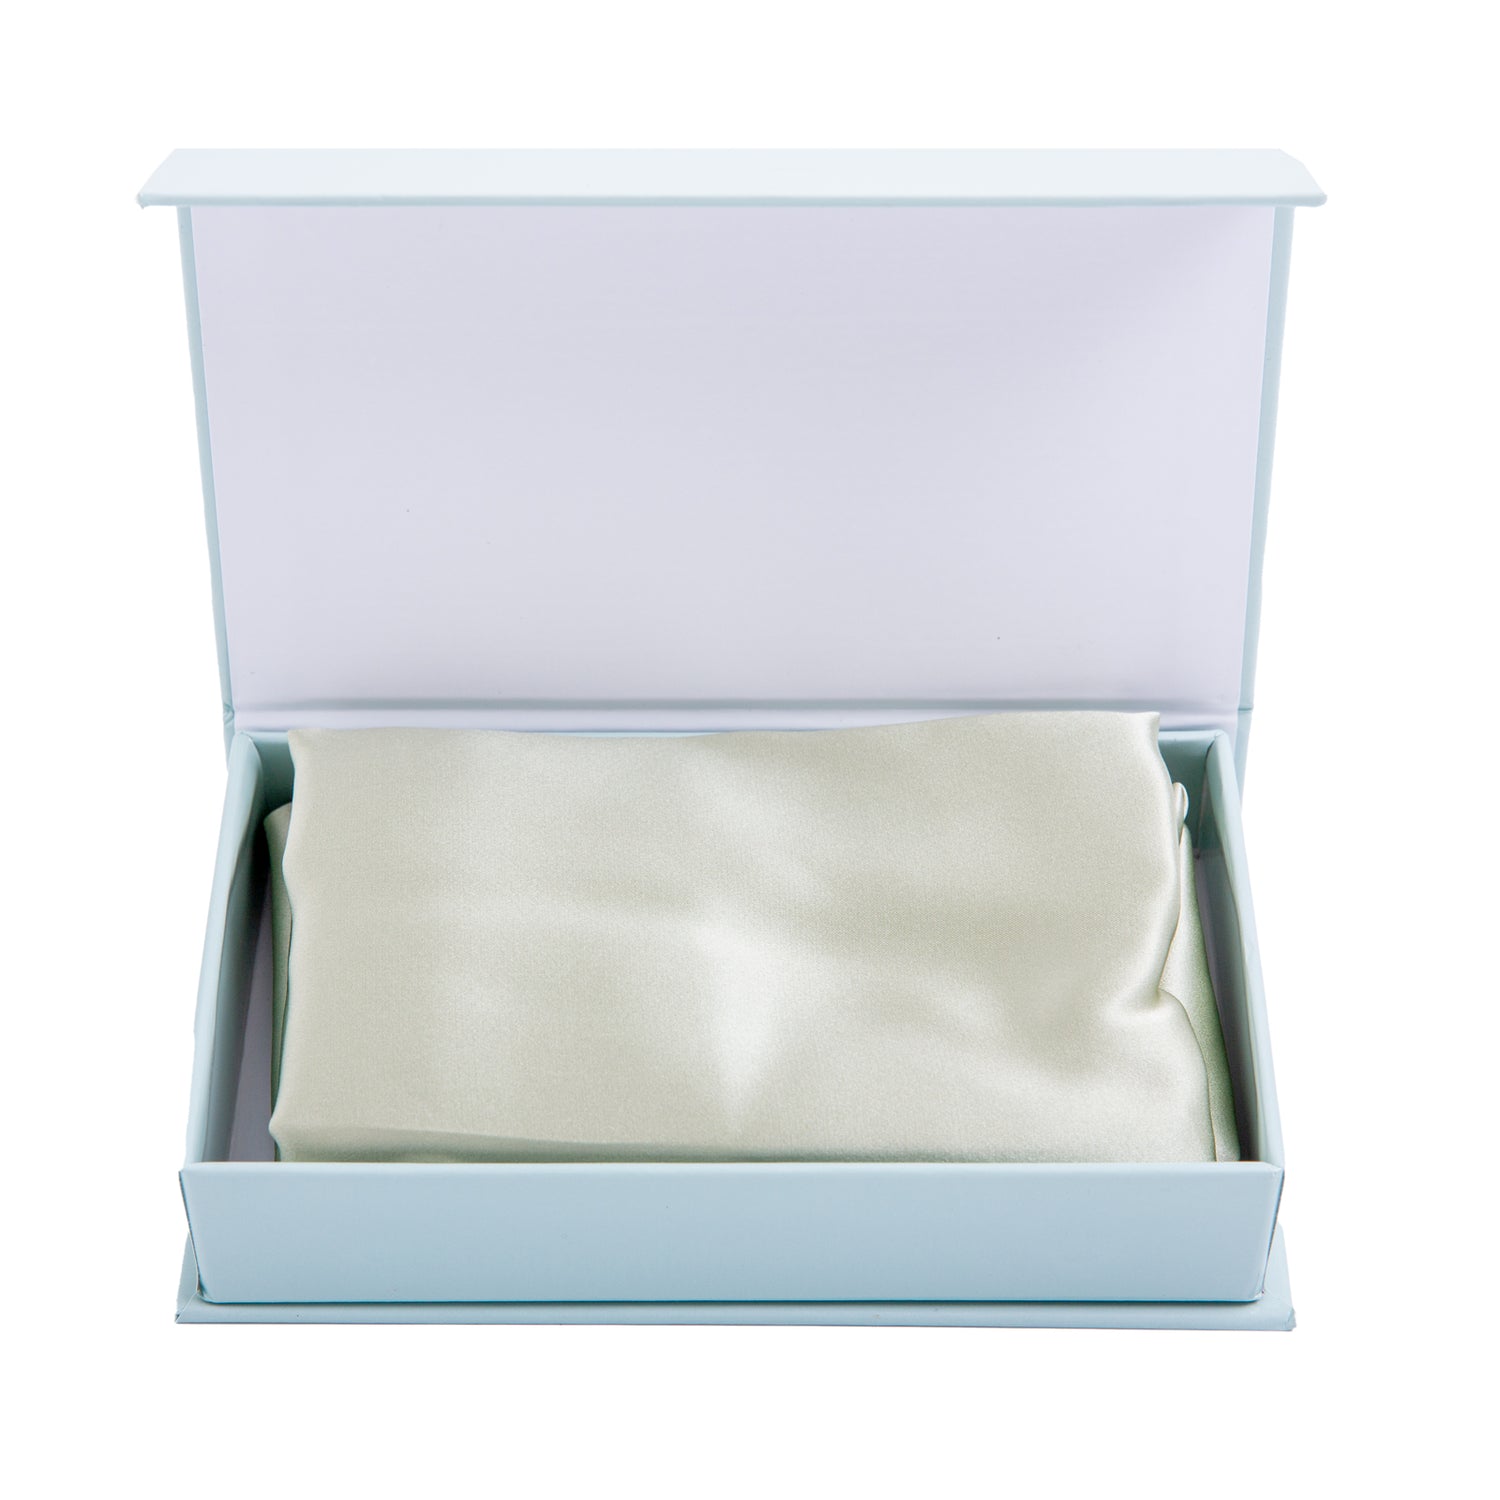 Exclusive Range Pure Silk Pillowcase Single Pack 51cm x 76cm-Bed Linen-PEROZ Accessories